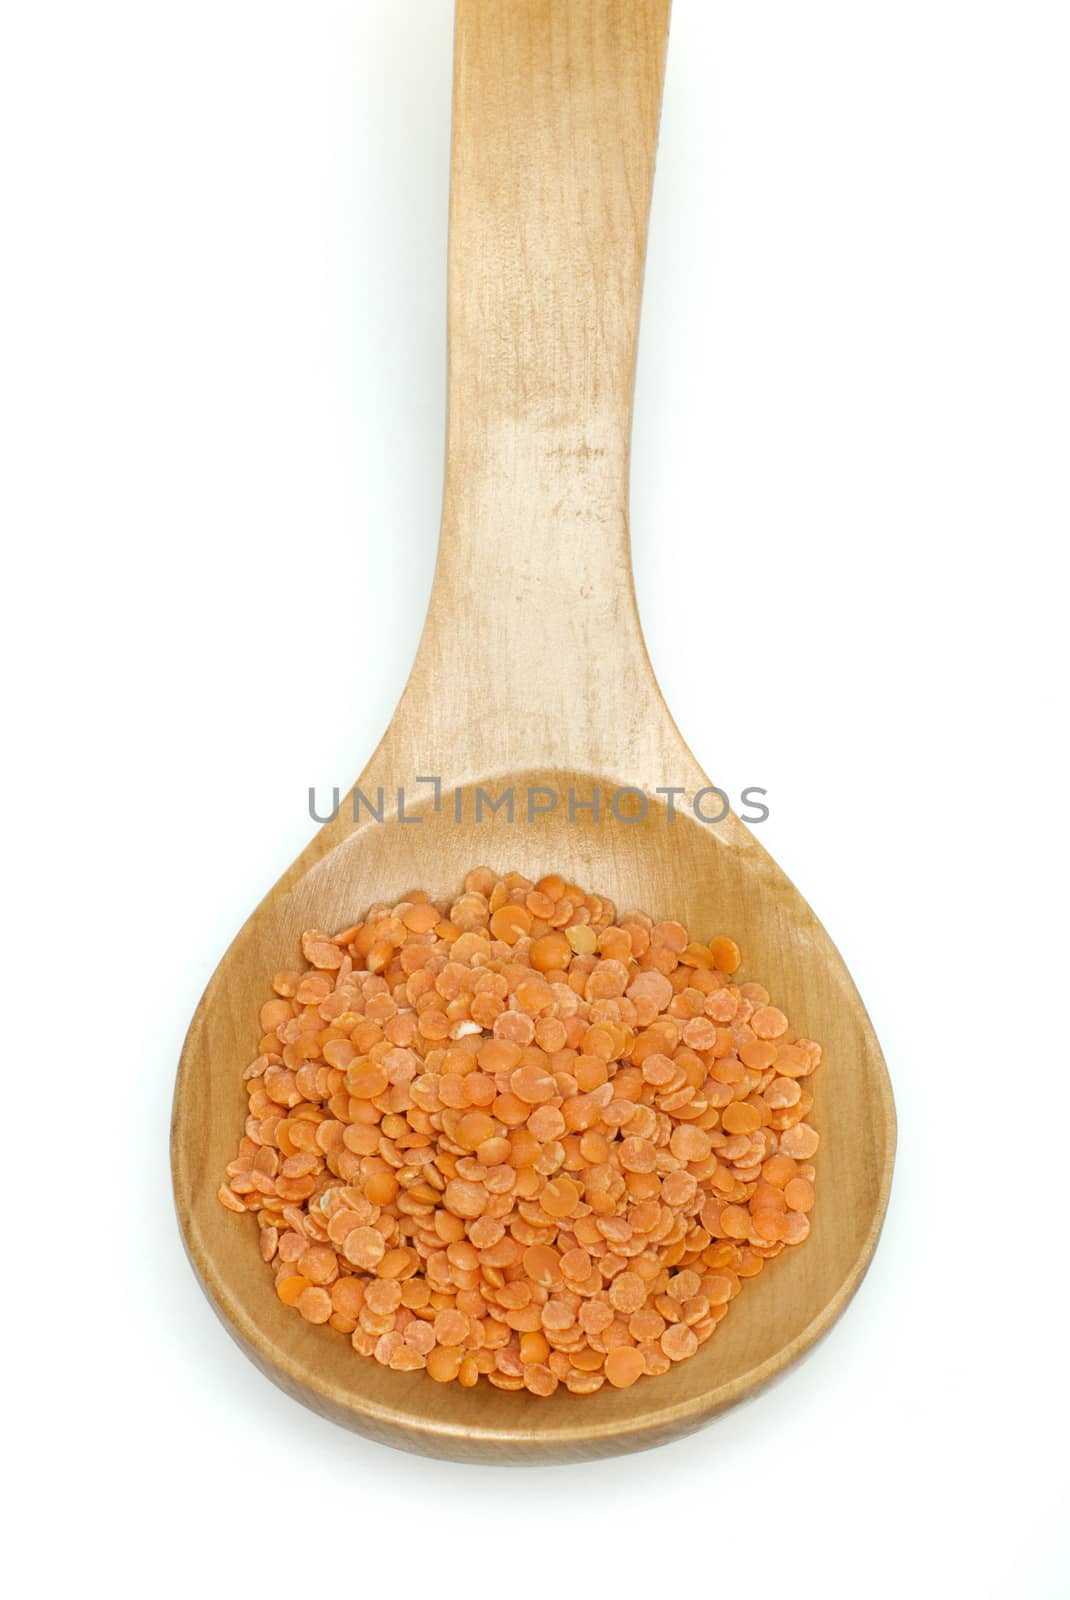 Lentil split in wooden spoon by deyan_georgiev